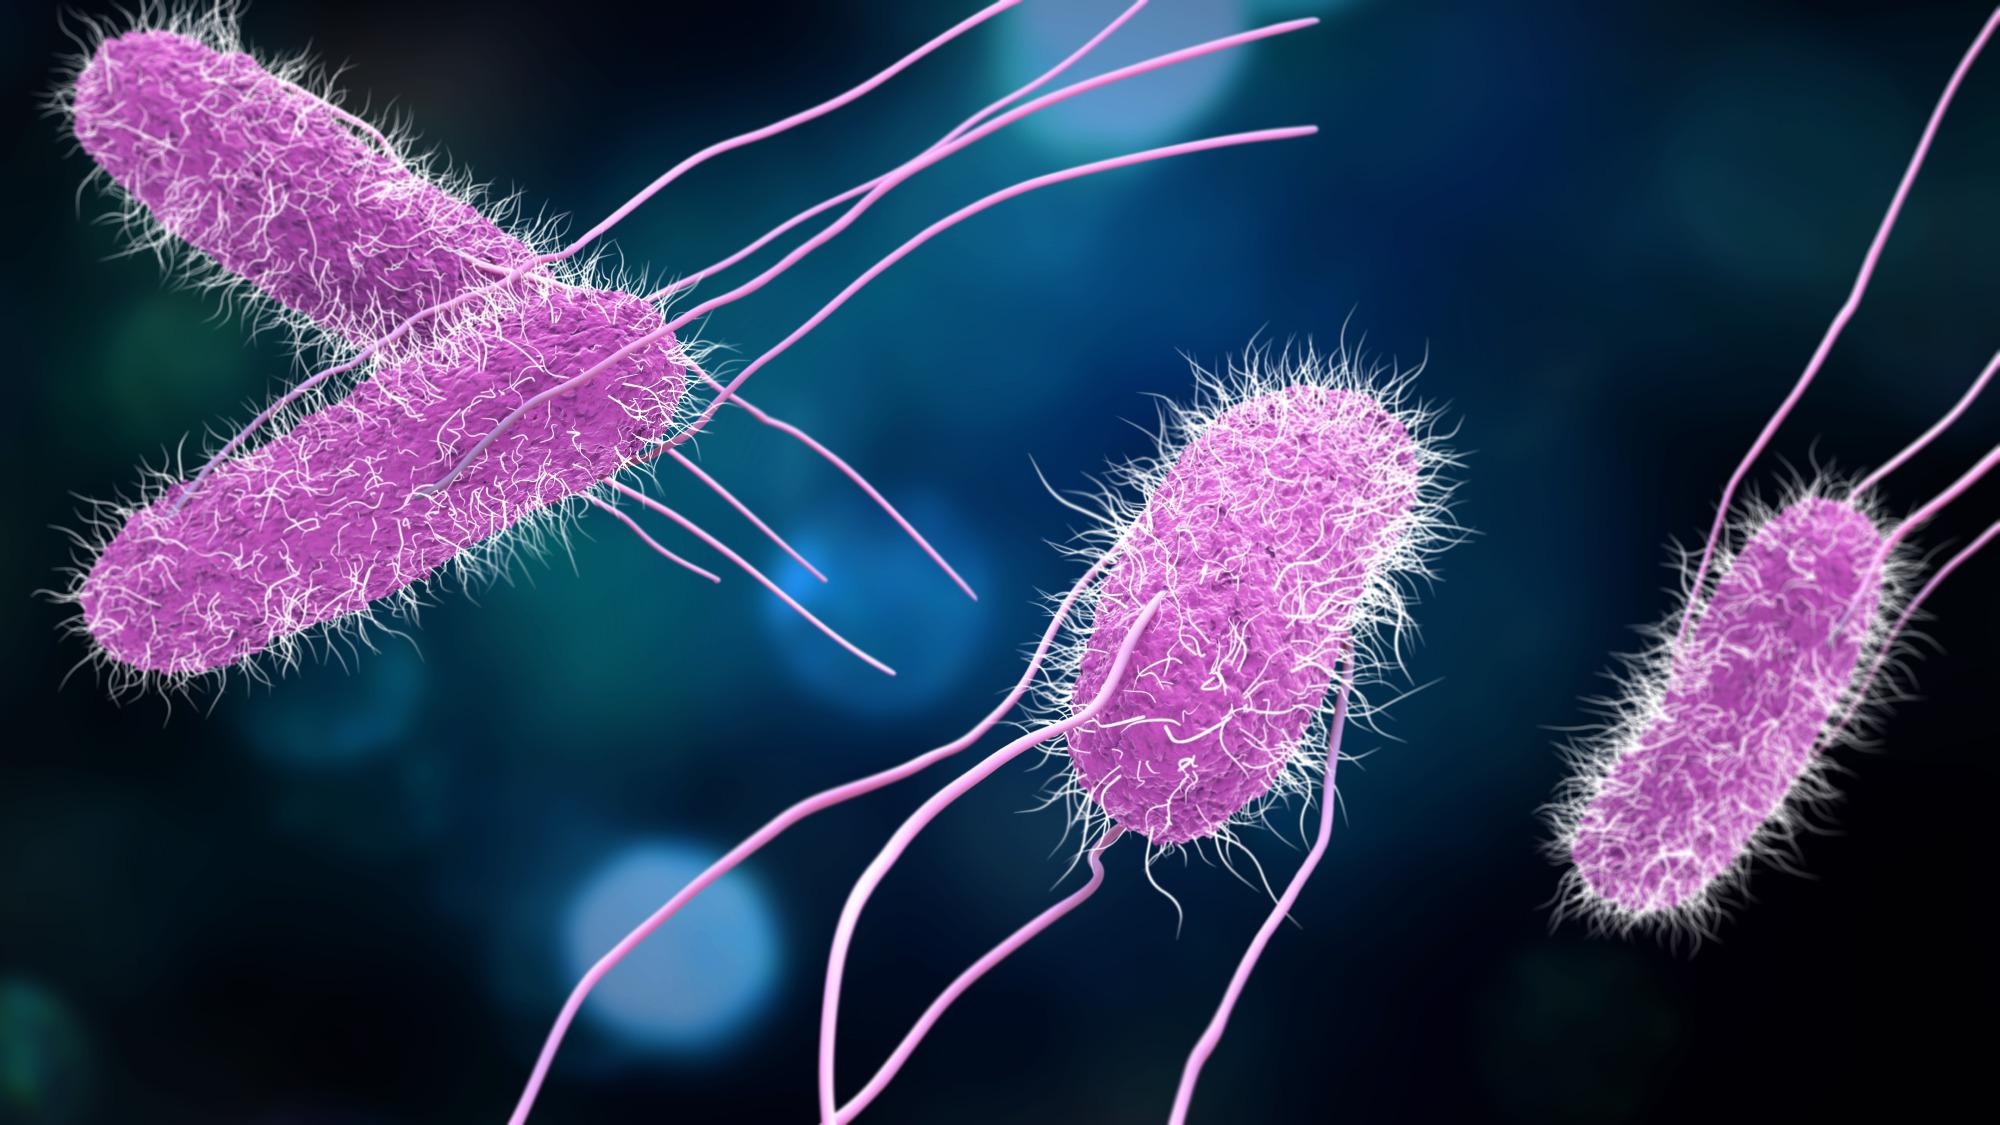 3D illustration of Salmonella Bacteria. Image Credit: urfin / Shutterstock